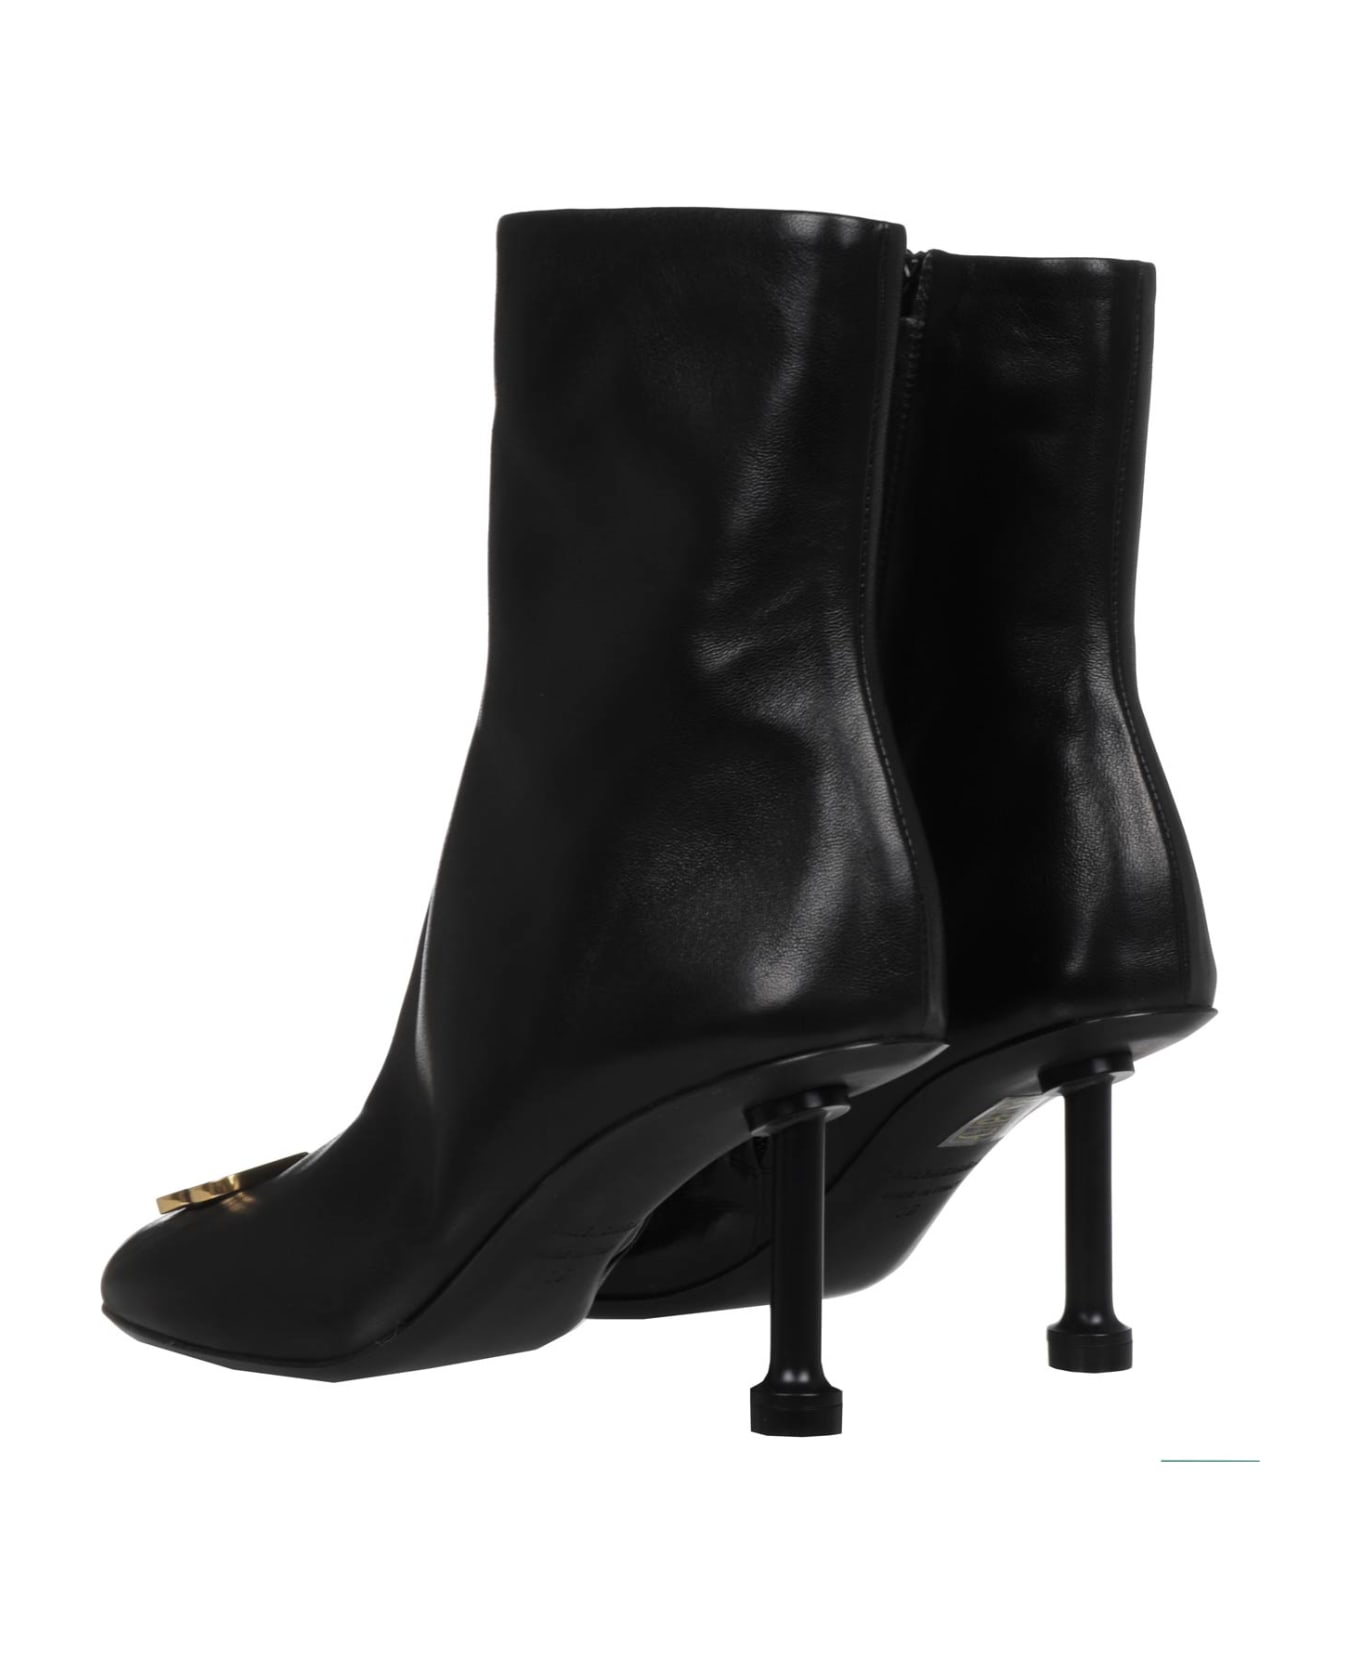 Balenciaga High Heels Ankle Boots - black